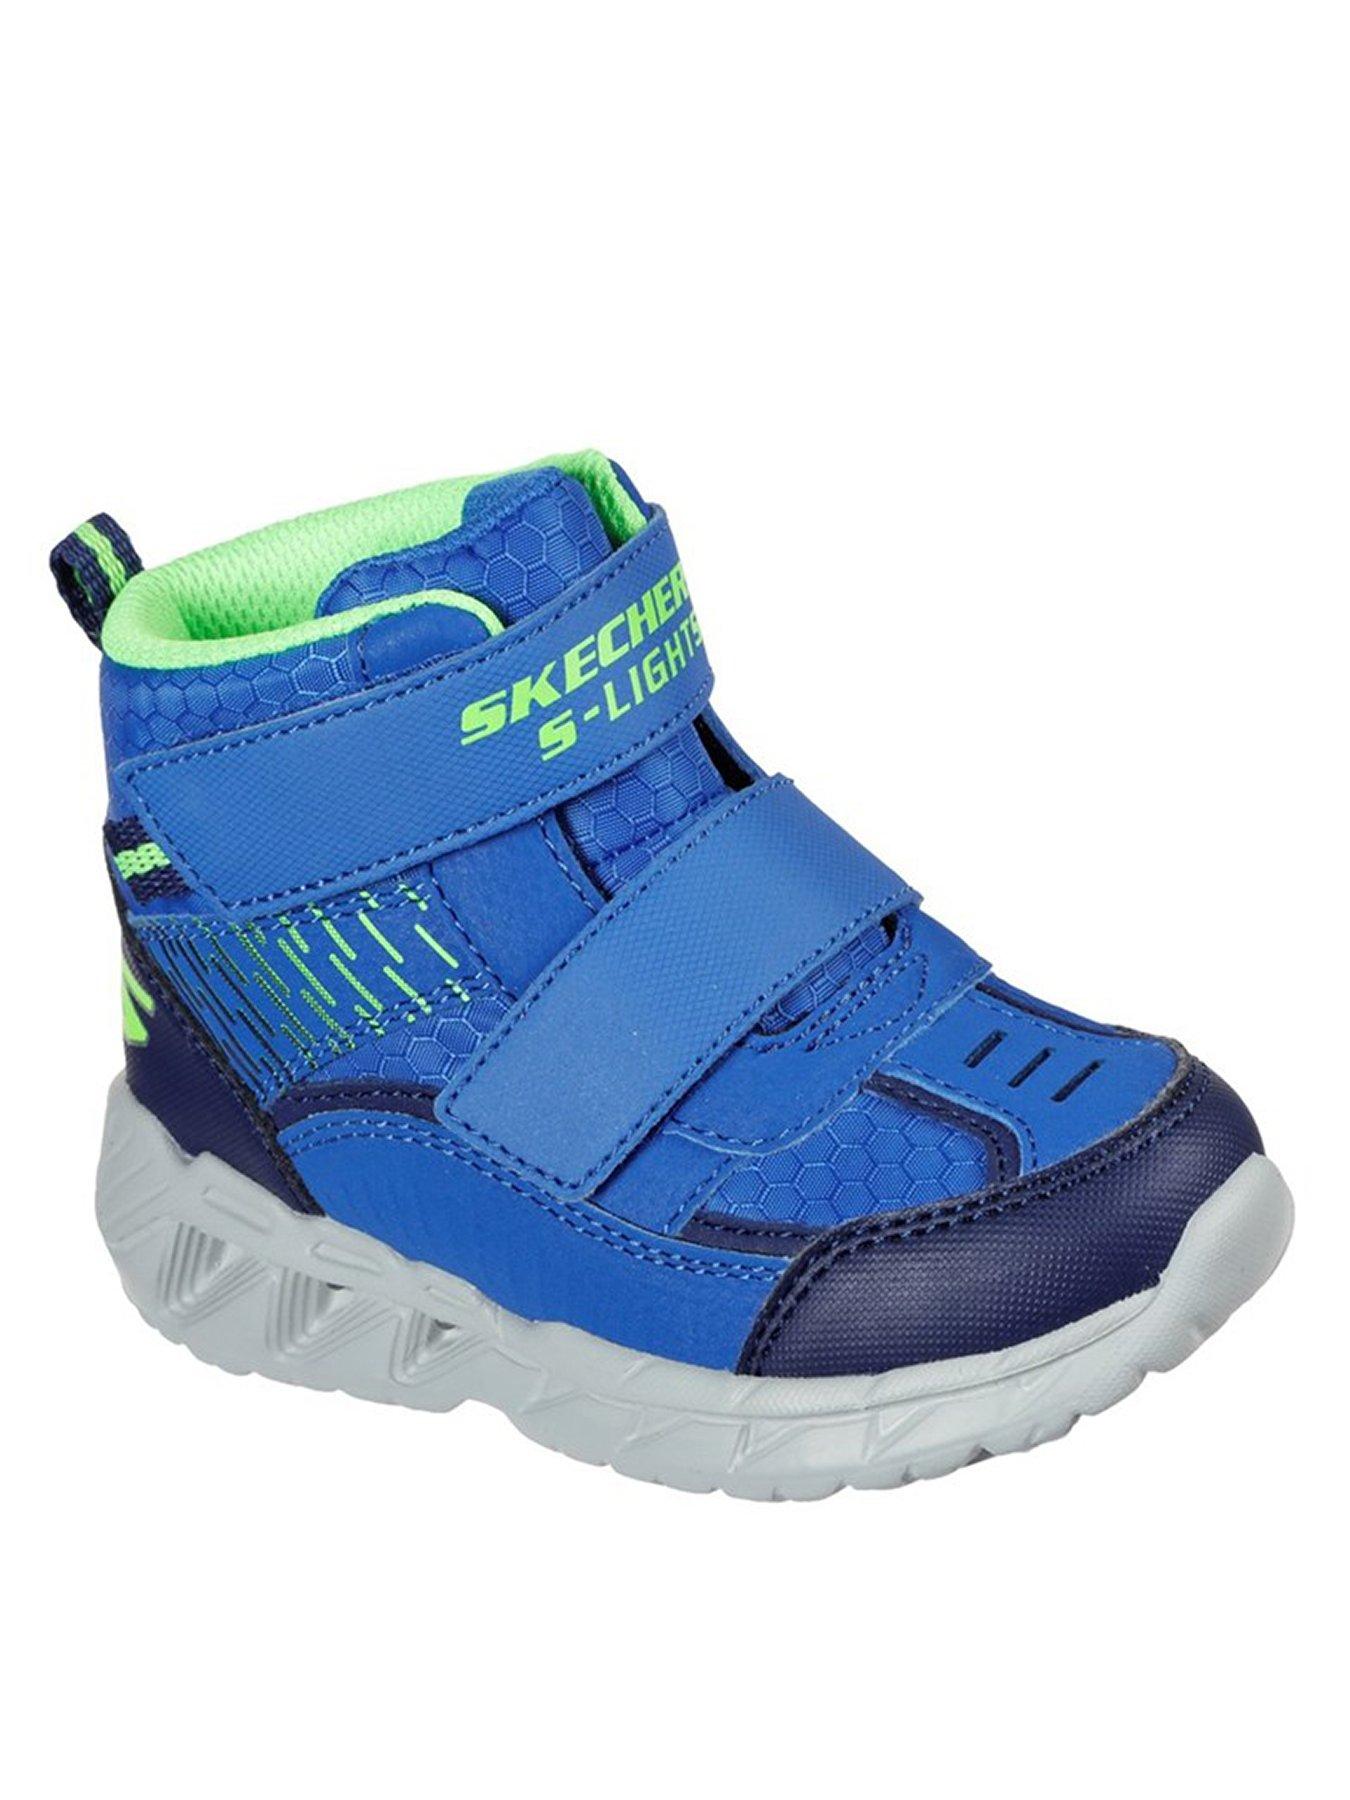 Shoes & boots Magna-lights Boots - Blue